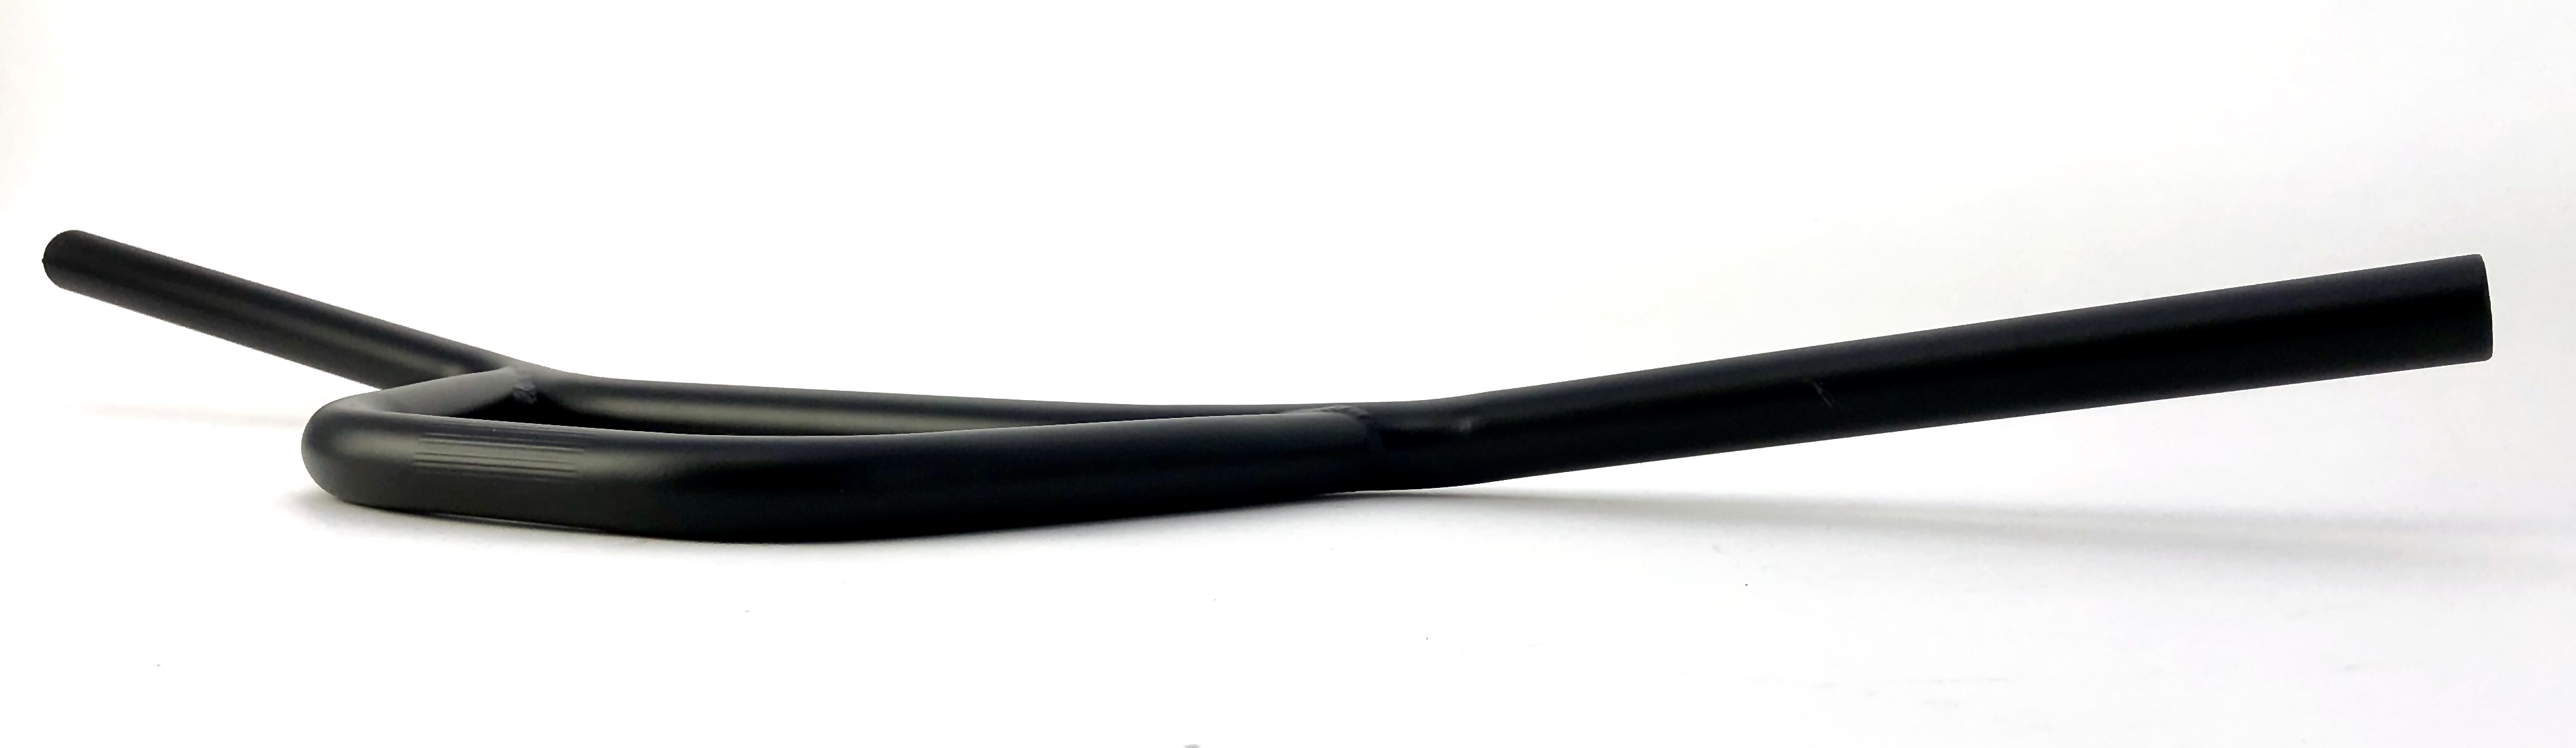 Flat Cross - wide and flat handle bar  in BMX shape black matte